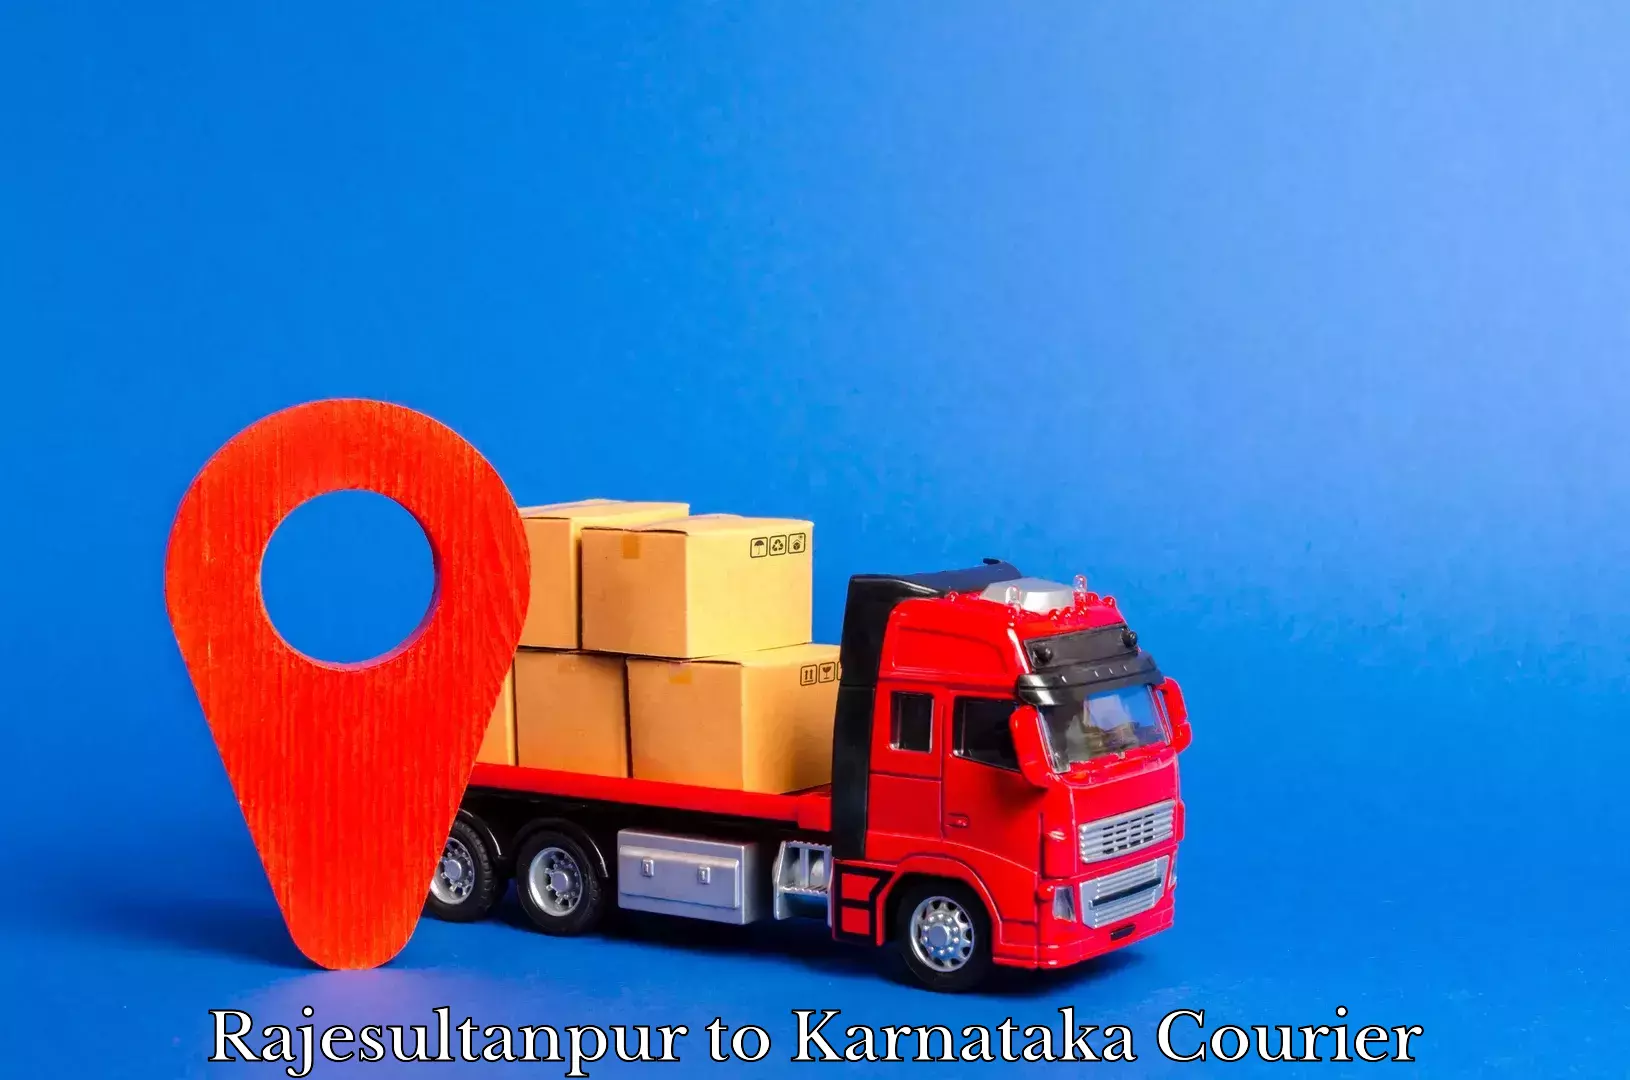 Innovative shipping solutions Rajesultanpur to Karnataka